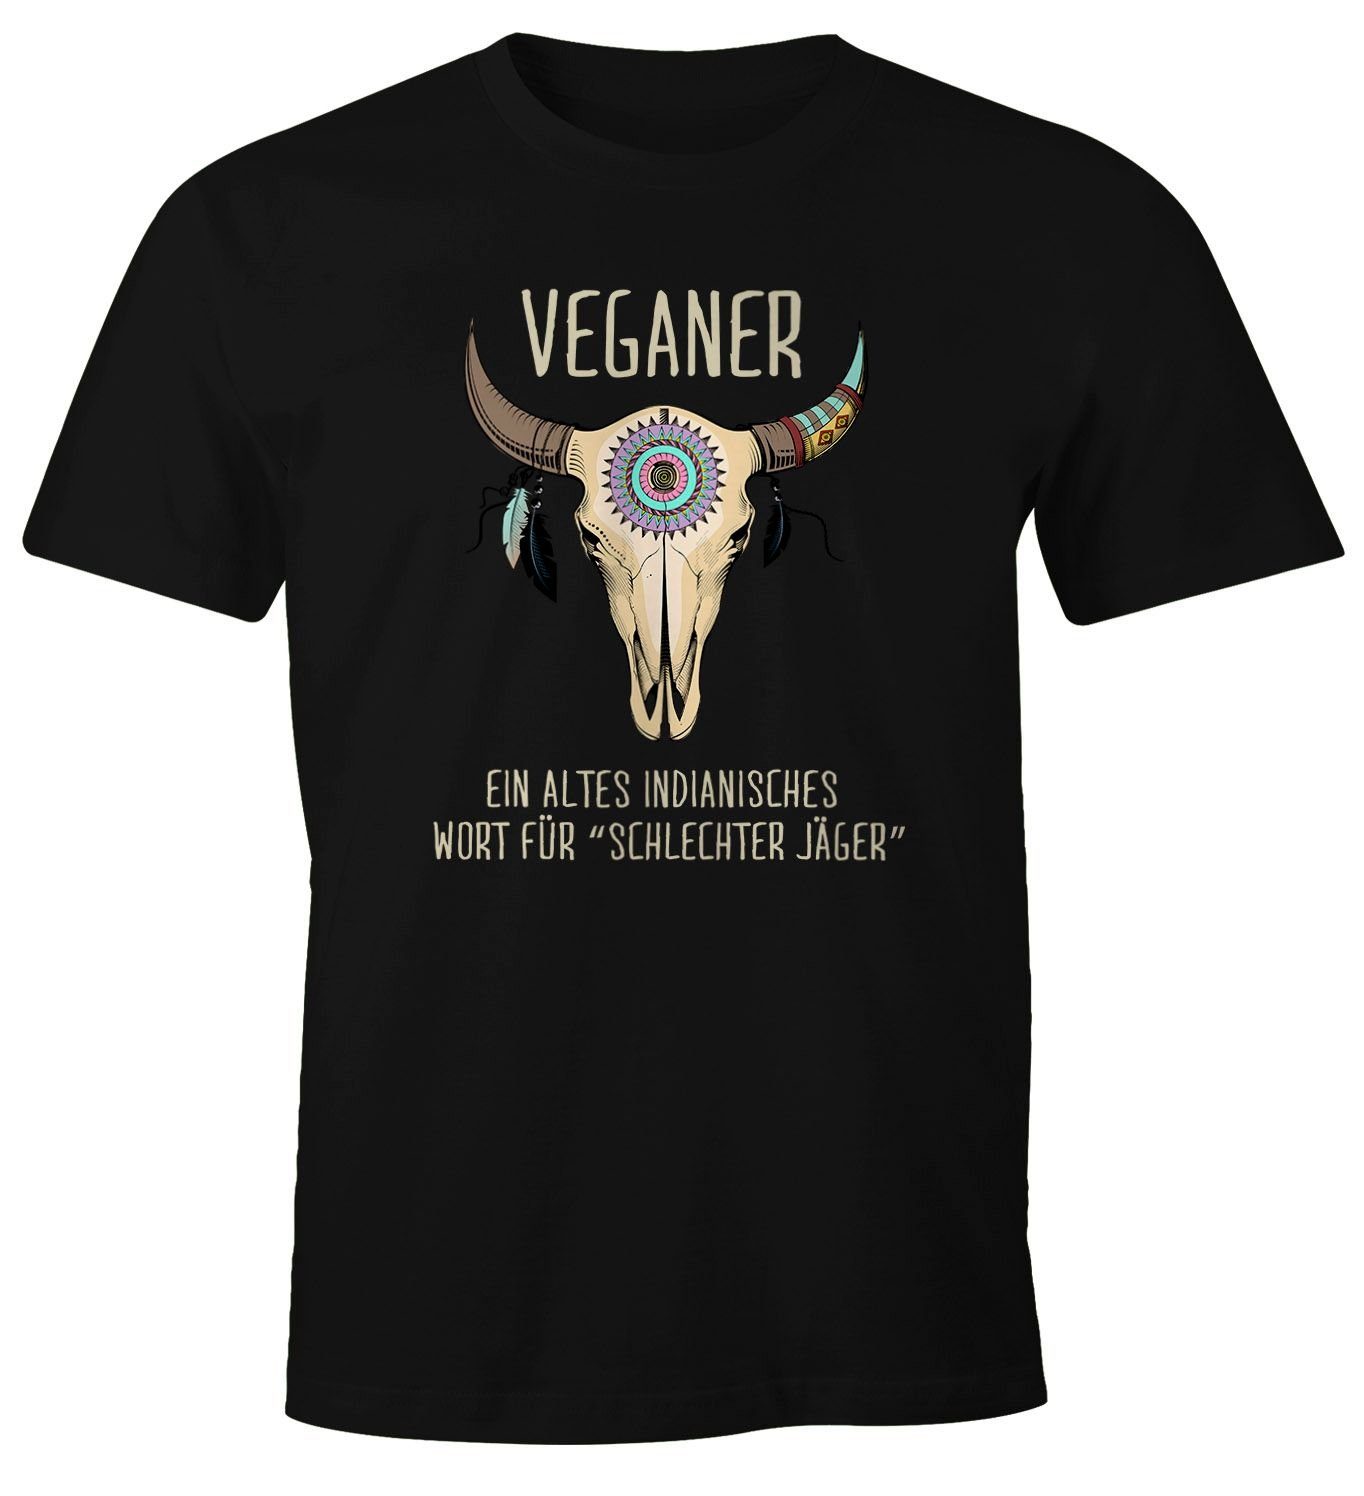 MoonWorks Print-Shirt Herren T-Shirt Vegetarier / Veganer Schlechter Jäger Spruch Skull lustig Fun-Shirt Moonworks® mit Print